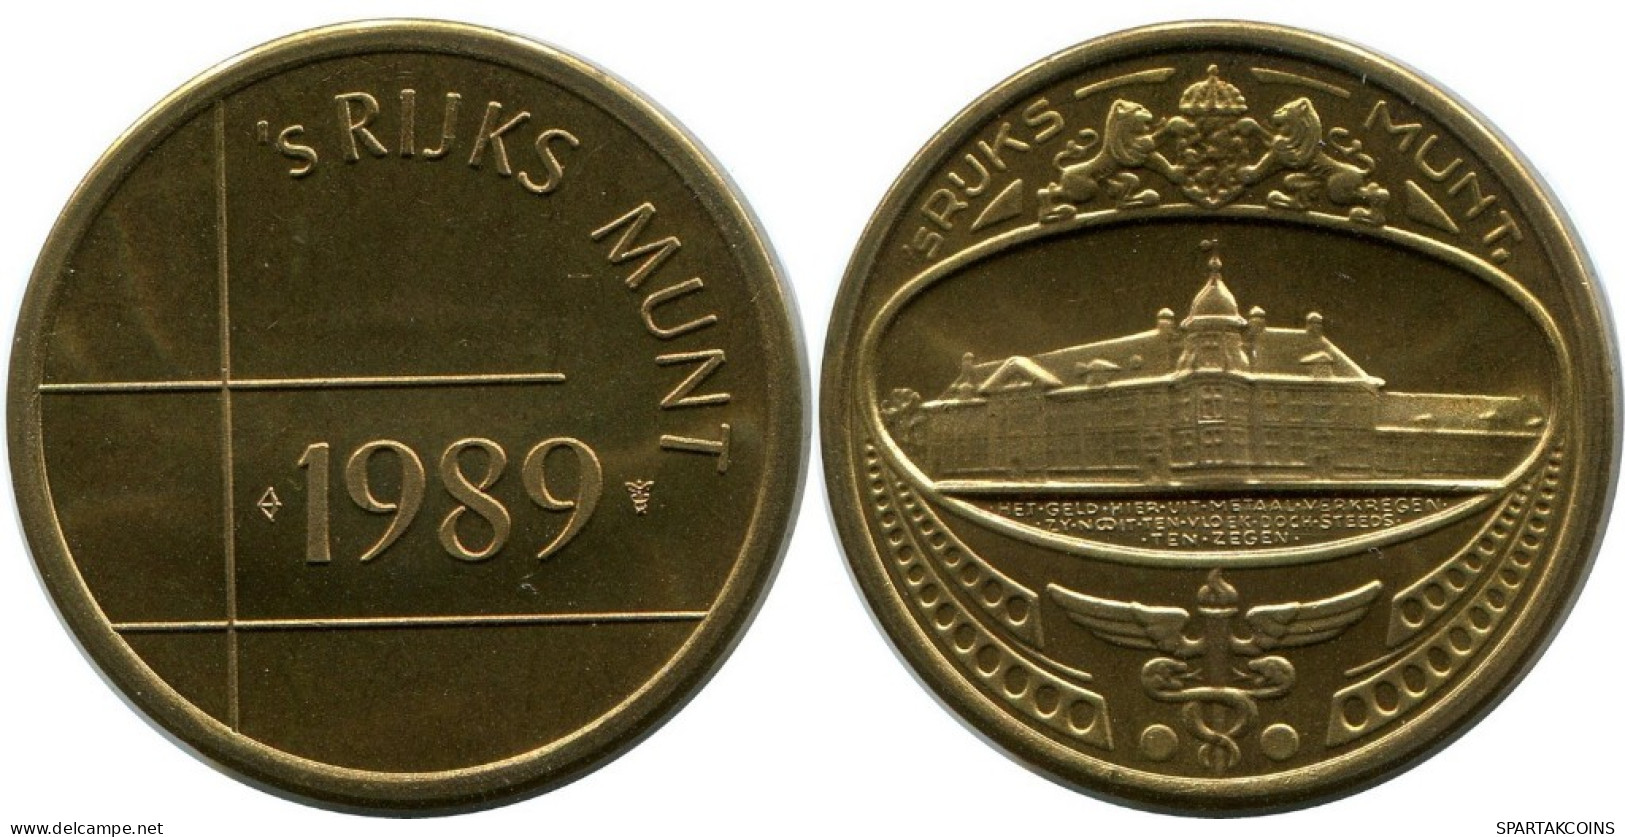 1989 ROYAL DUTCH MINT SET TOKEN NÉERLANDAIS NETHERLANDS MINT (From BU Mint Set) #AH028.F.A - Mint Sets & Proof Sets